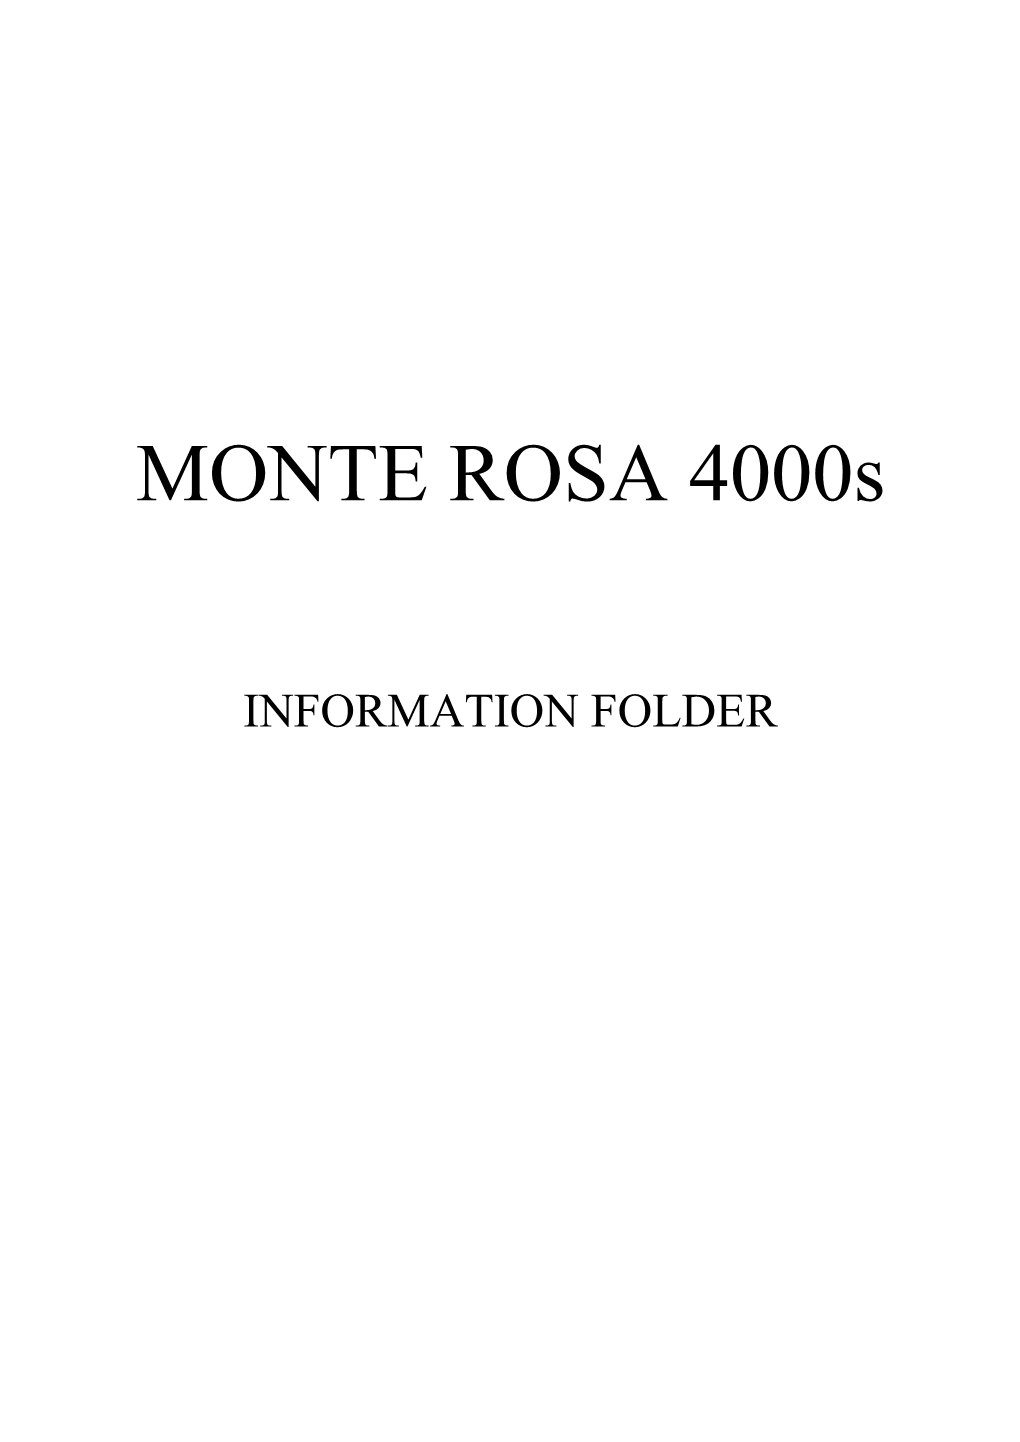 MONTE ROSA 4000S